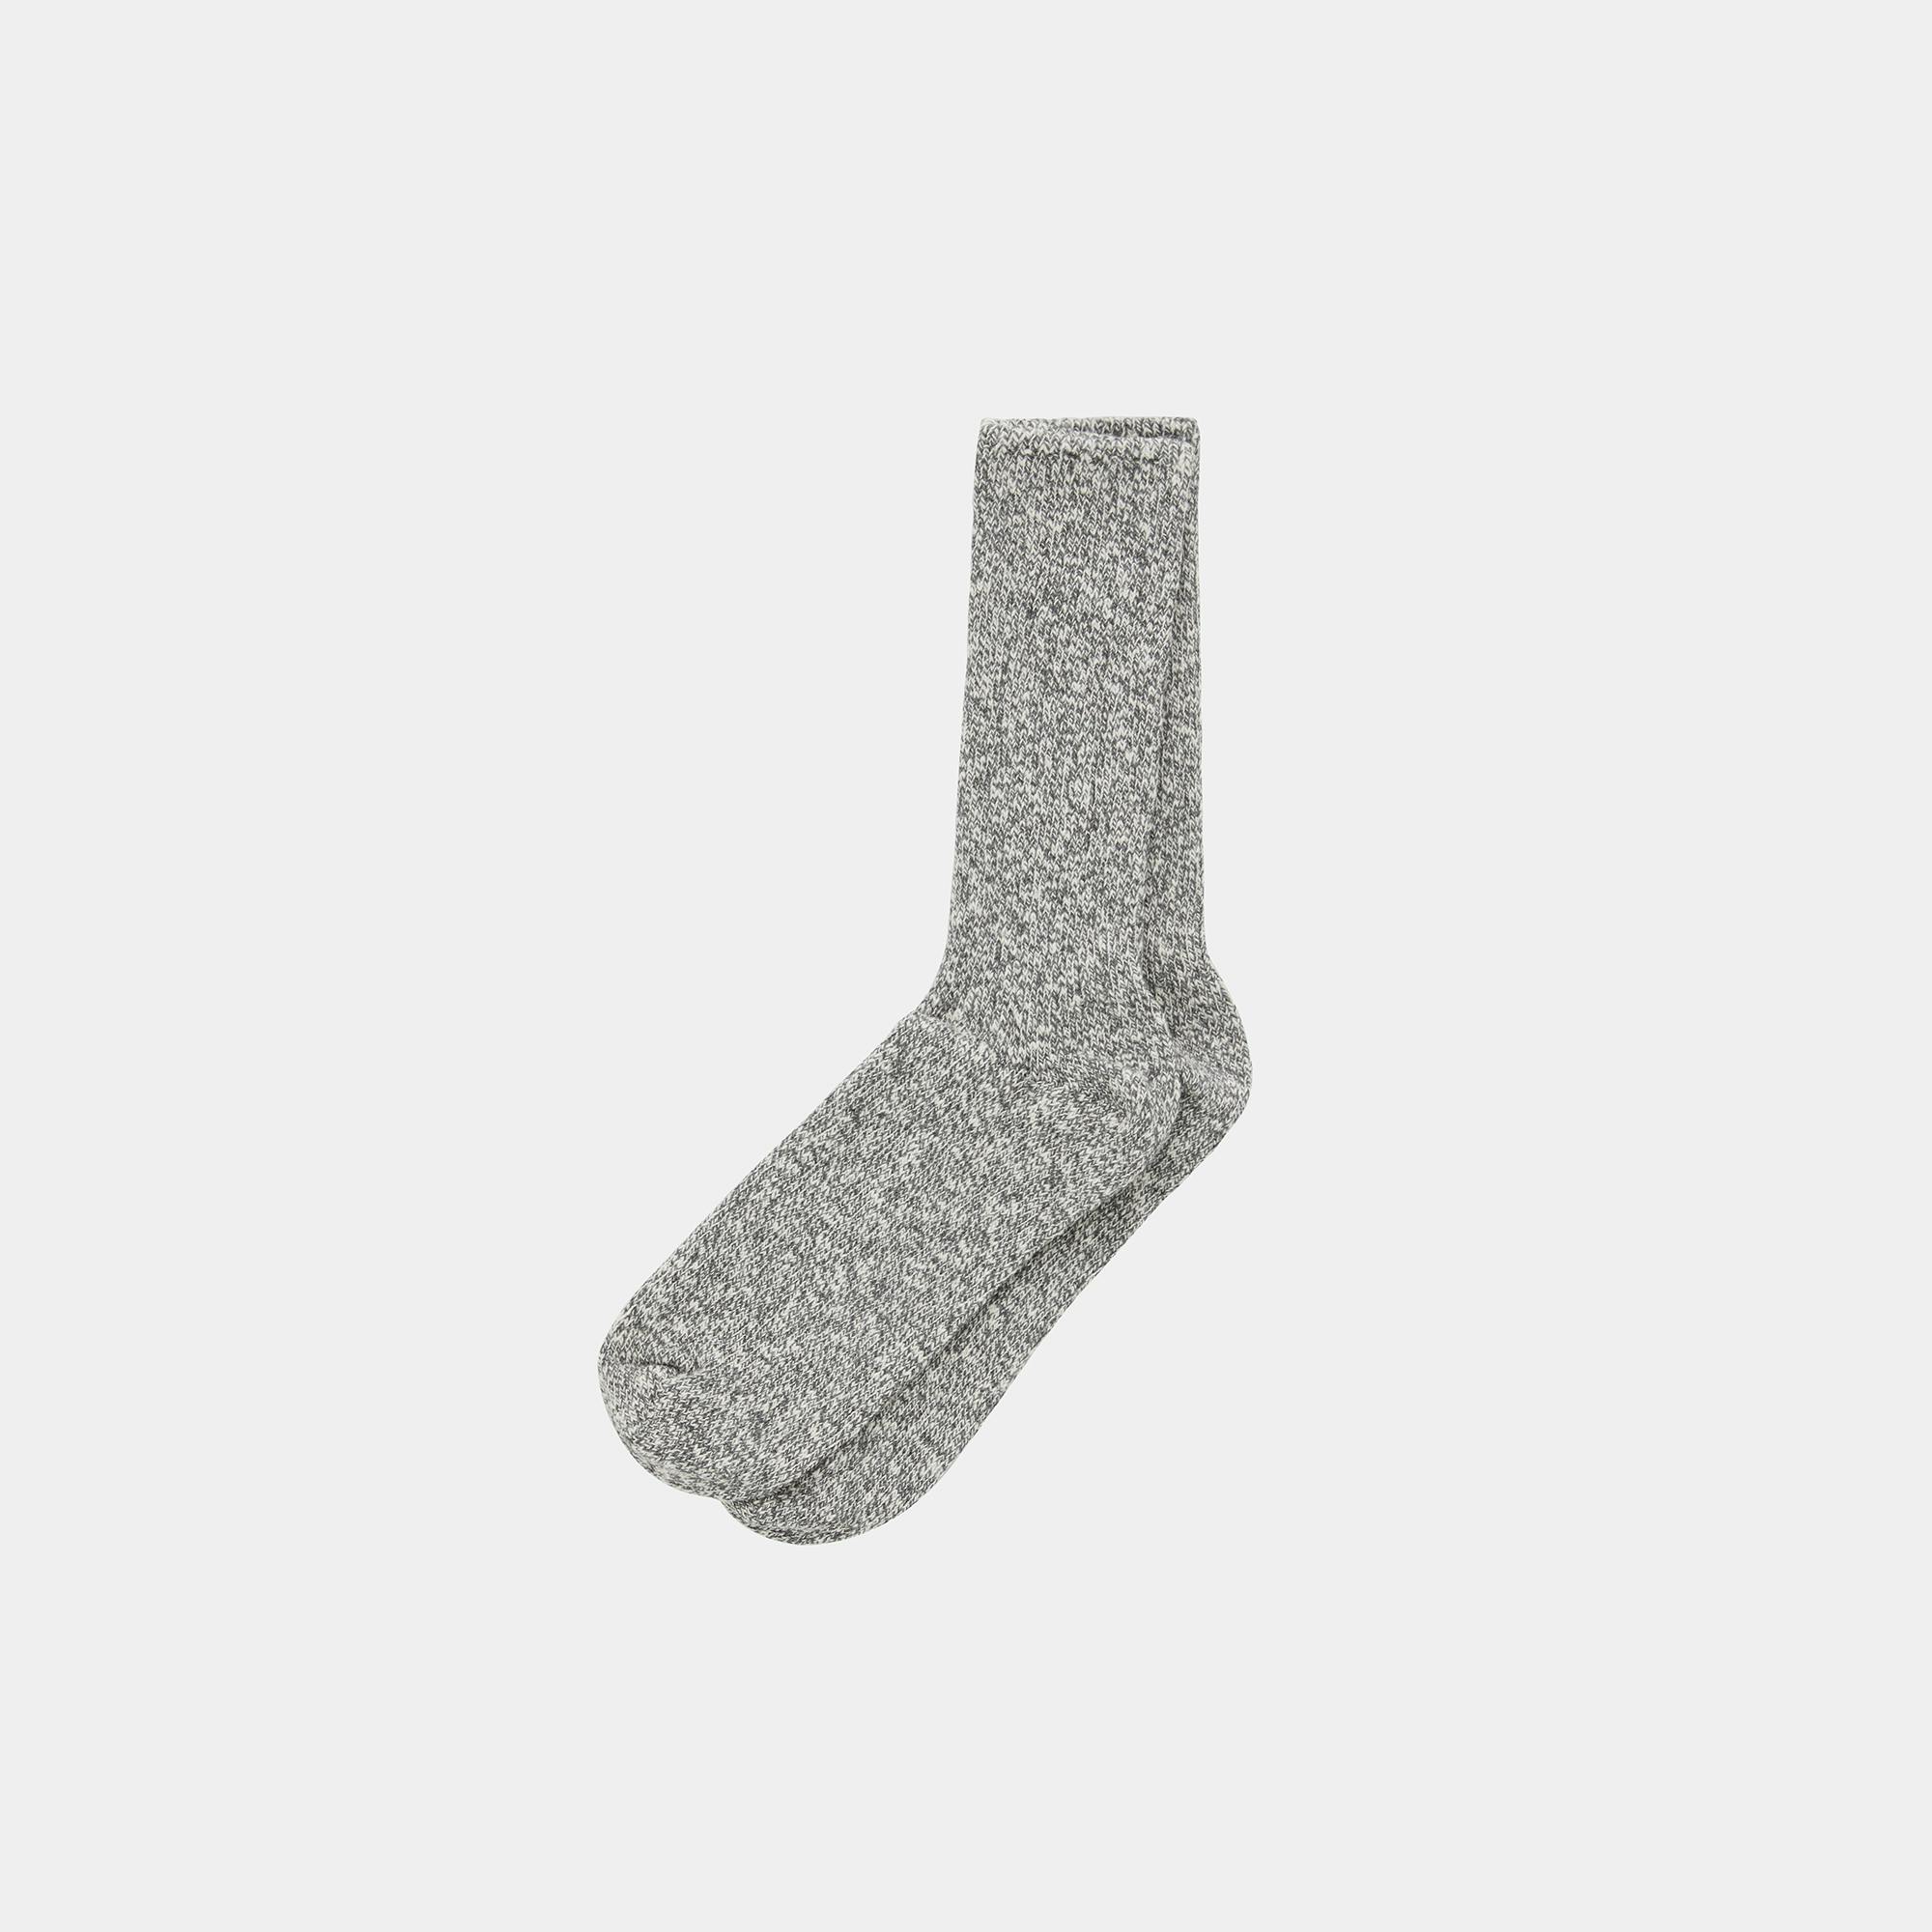 Crew Socks (Heathered Grey) - Render - Back